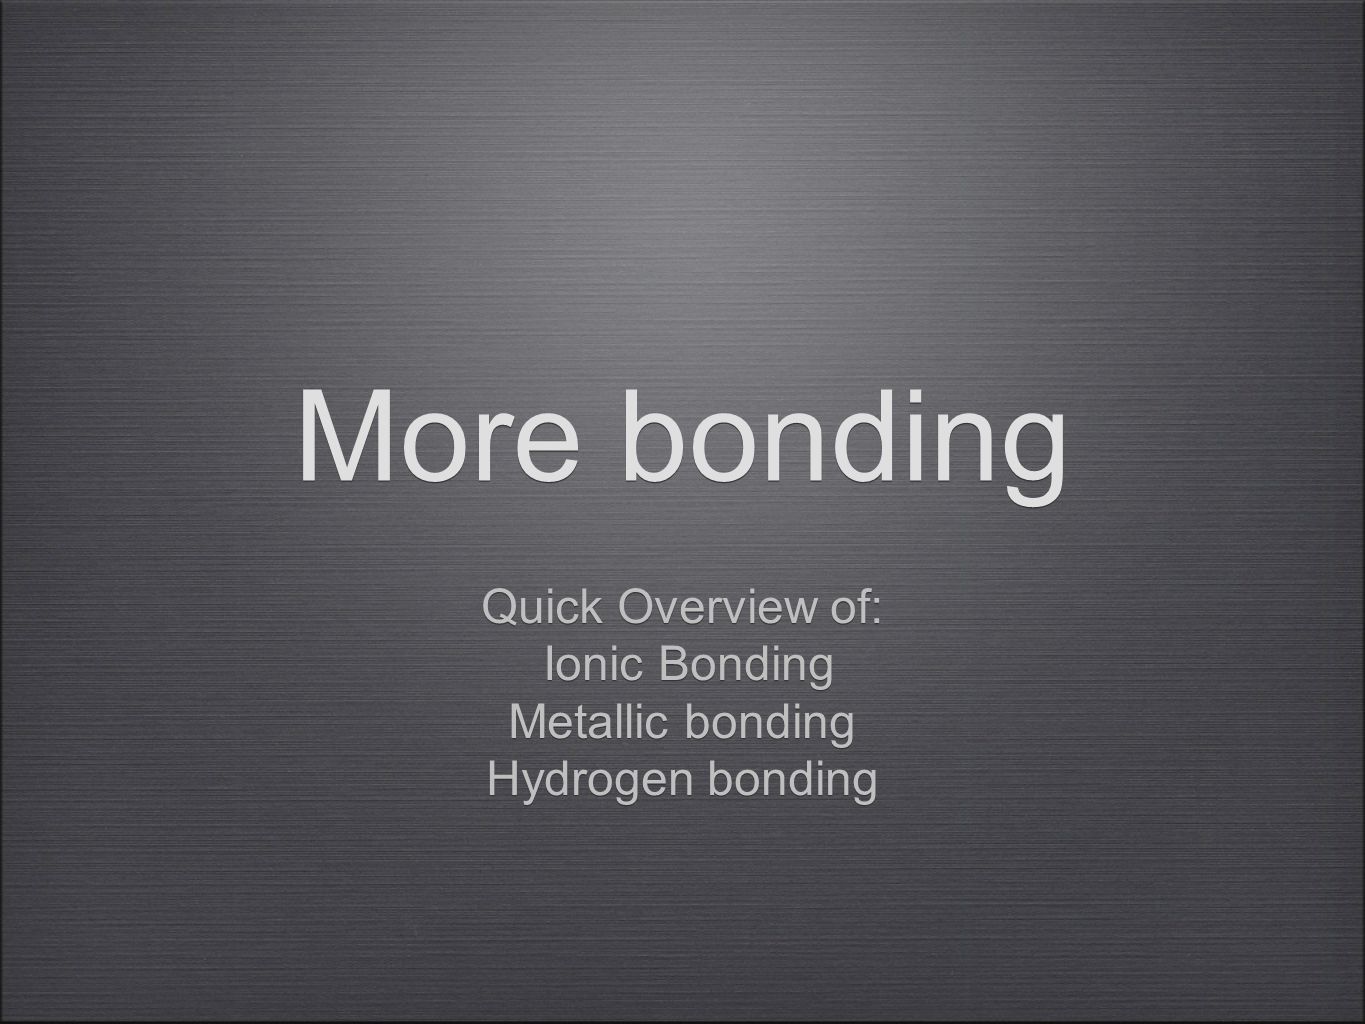 More bonding Quick Overview of: Ionic Bonding Metallic bonding